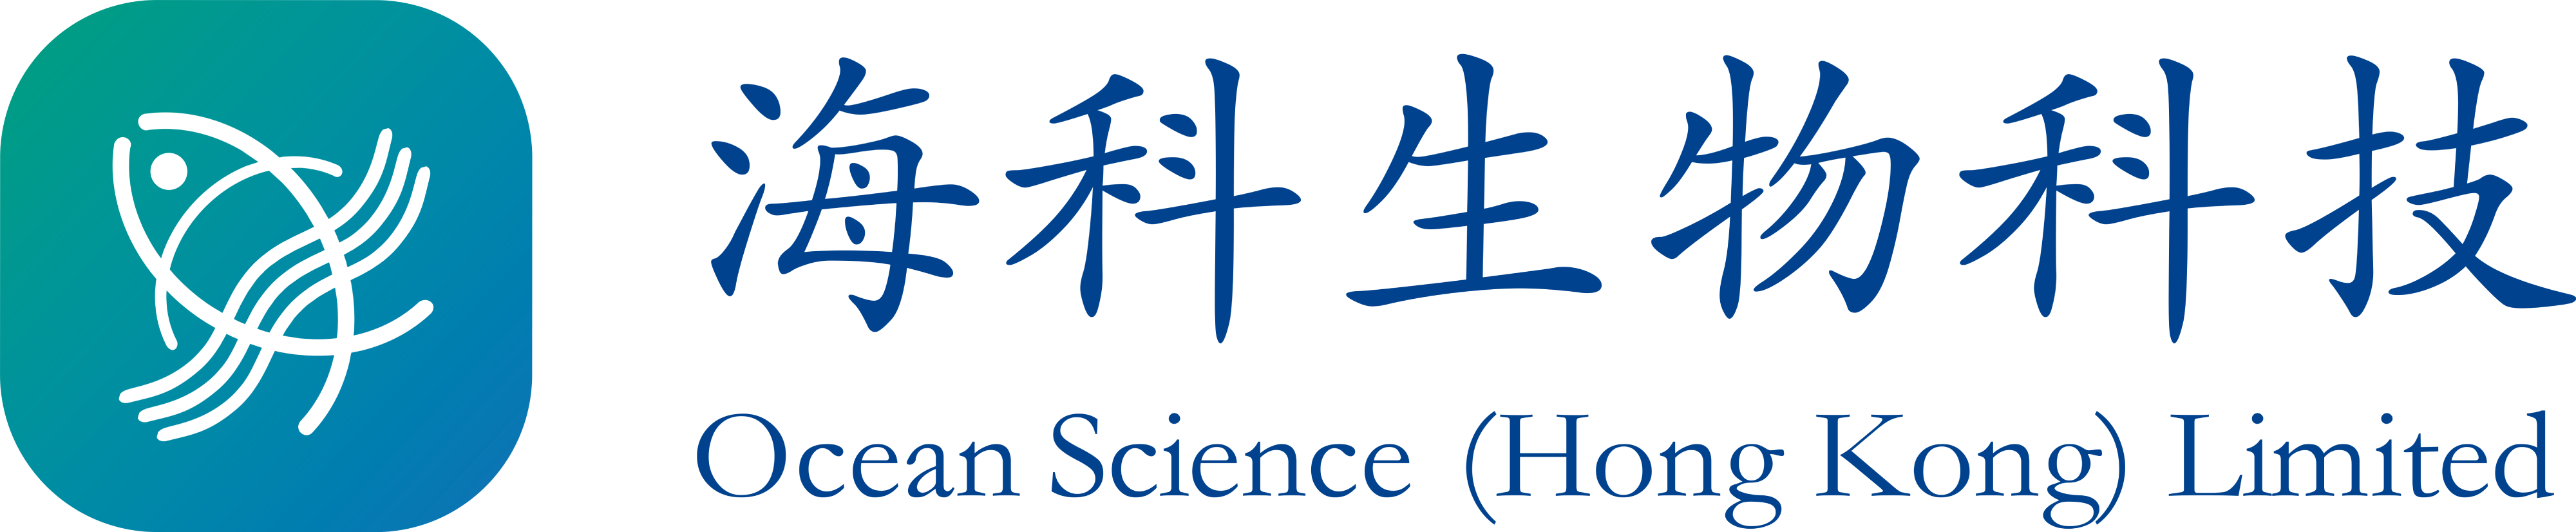 Ocean Science (Hong Kong) Limited